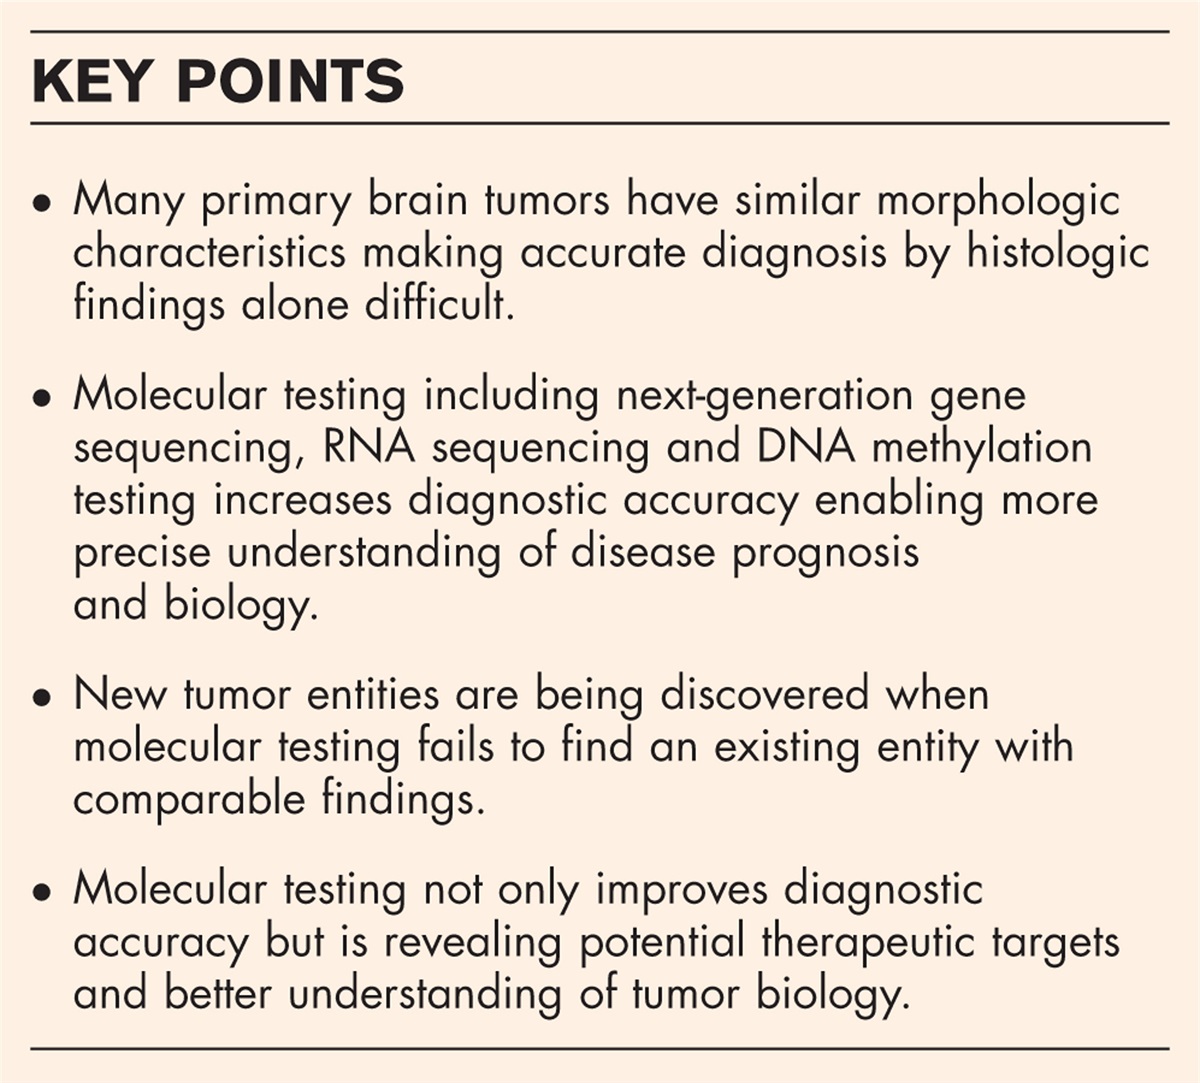 Clinical impact of molecular profiling in rare brain tumors